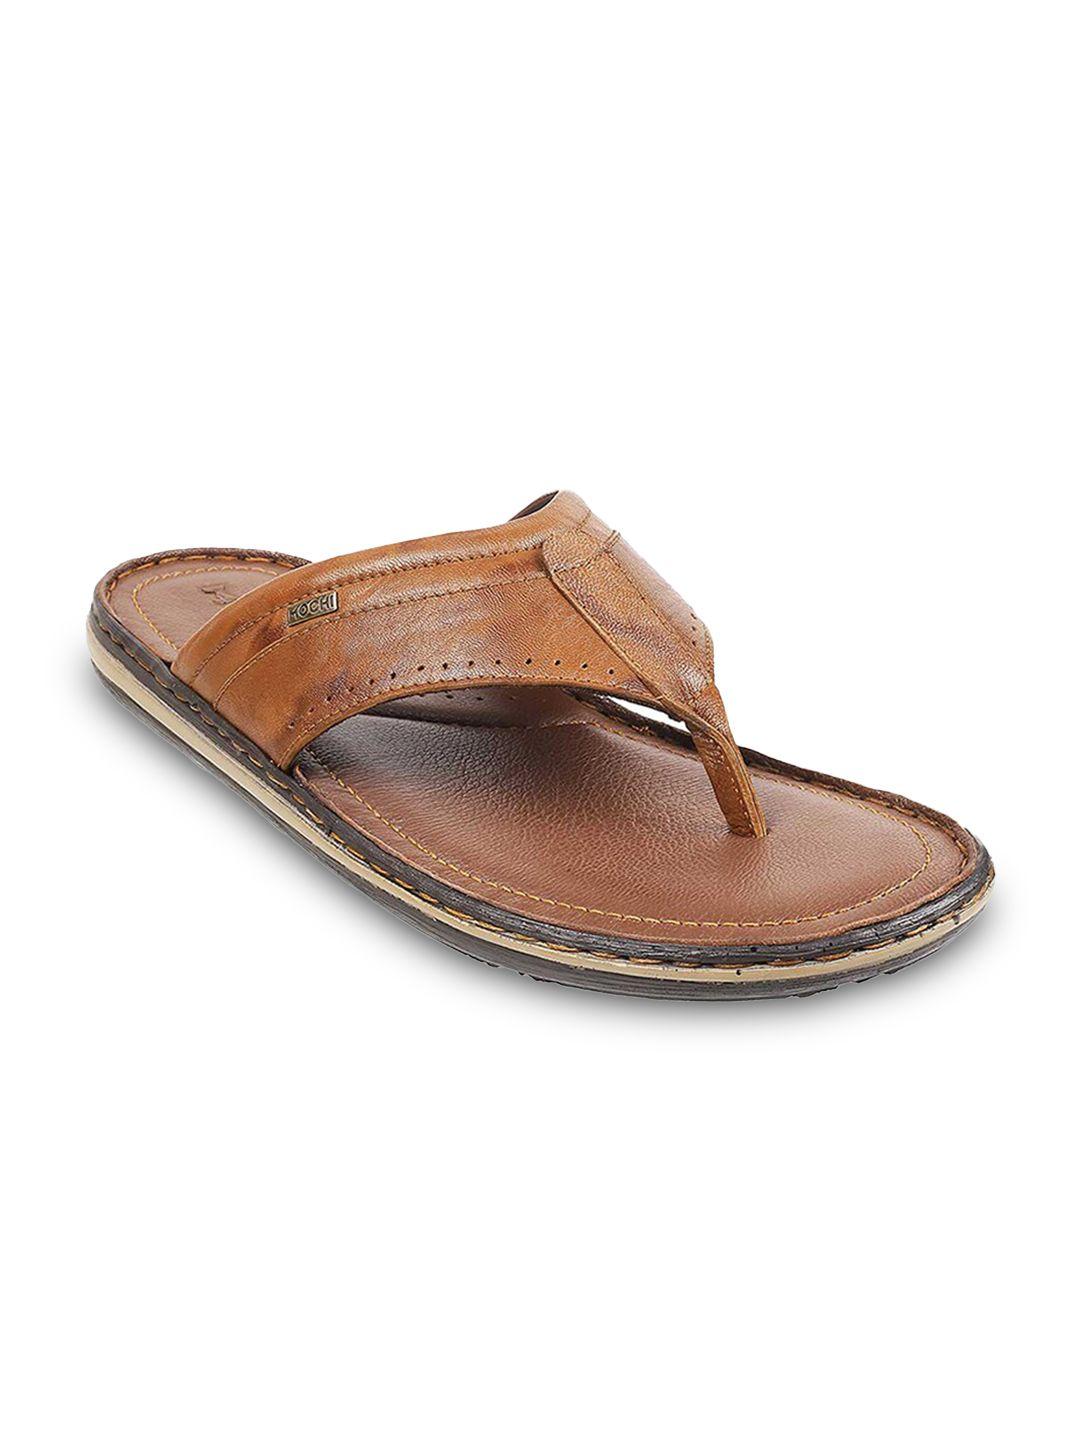 mochi men tan leather comfort sandals